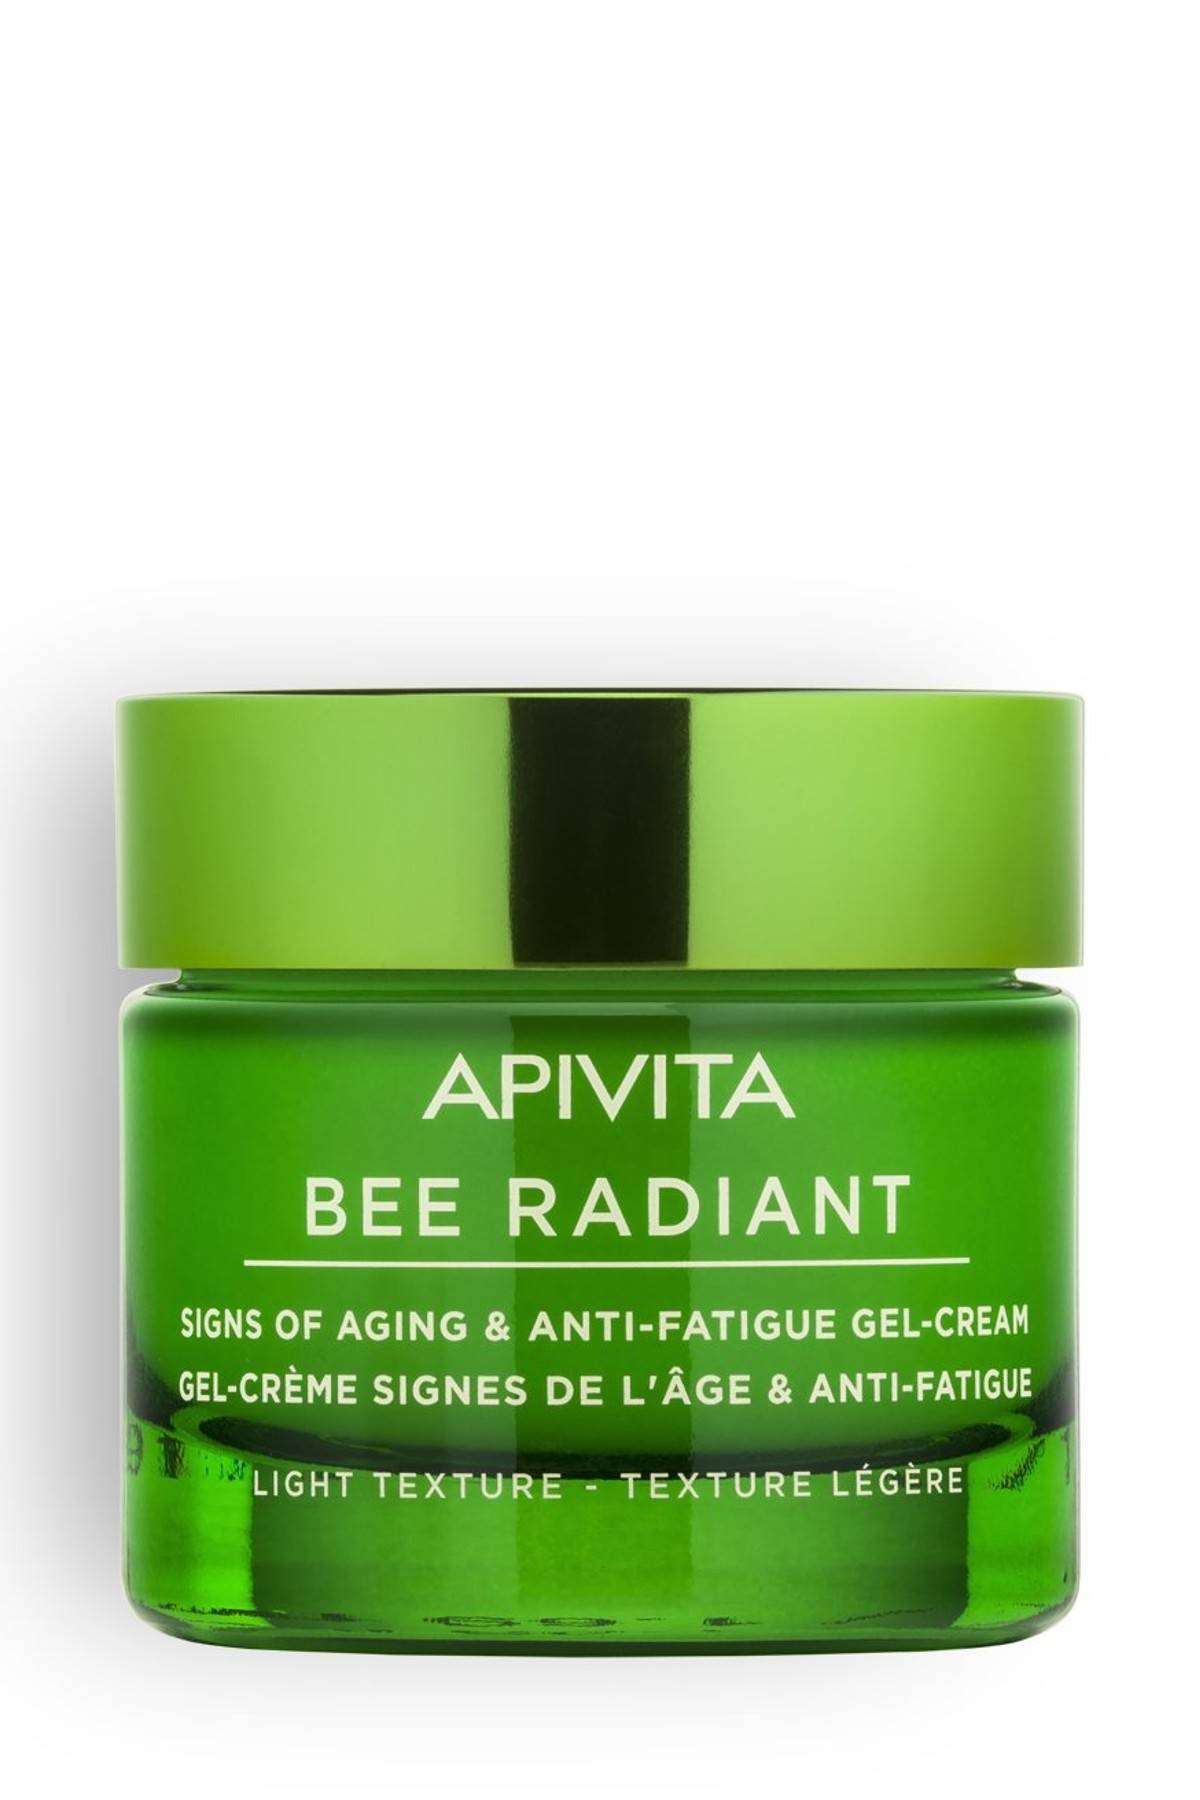 Crema-gel Bee Radiant de Apivita